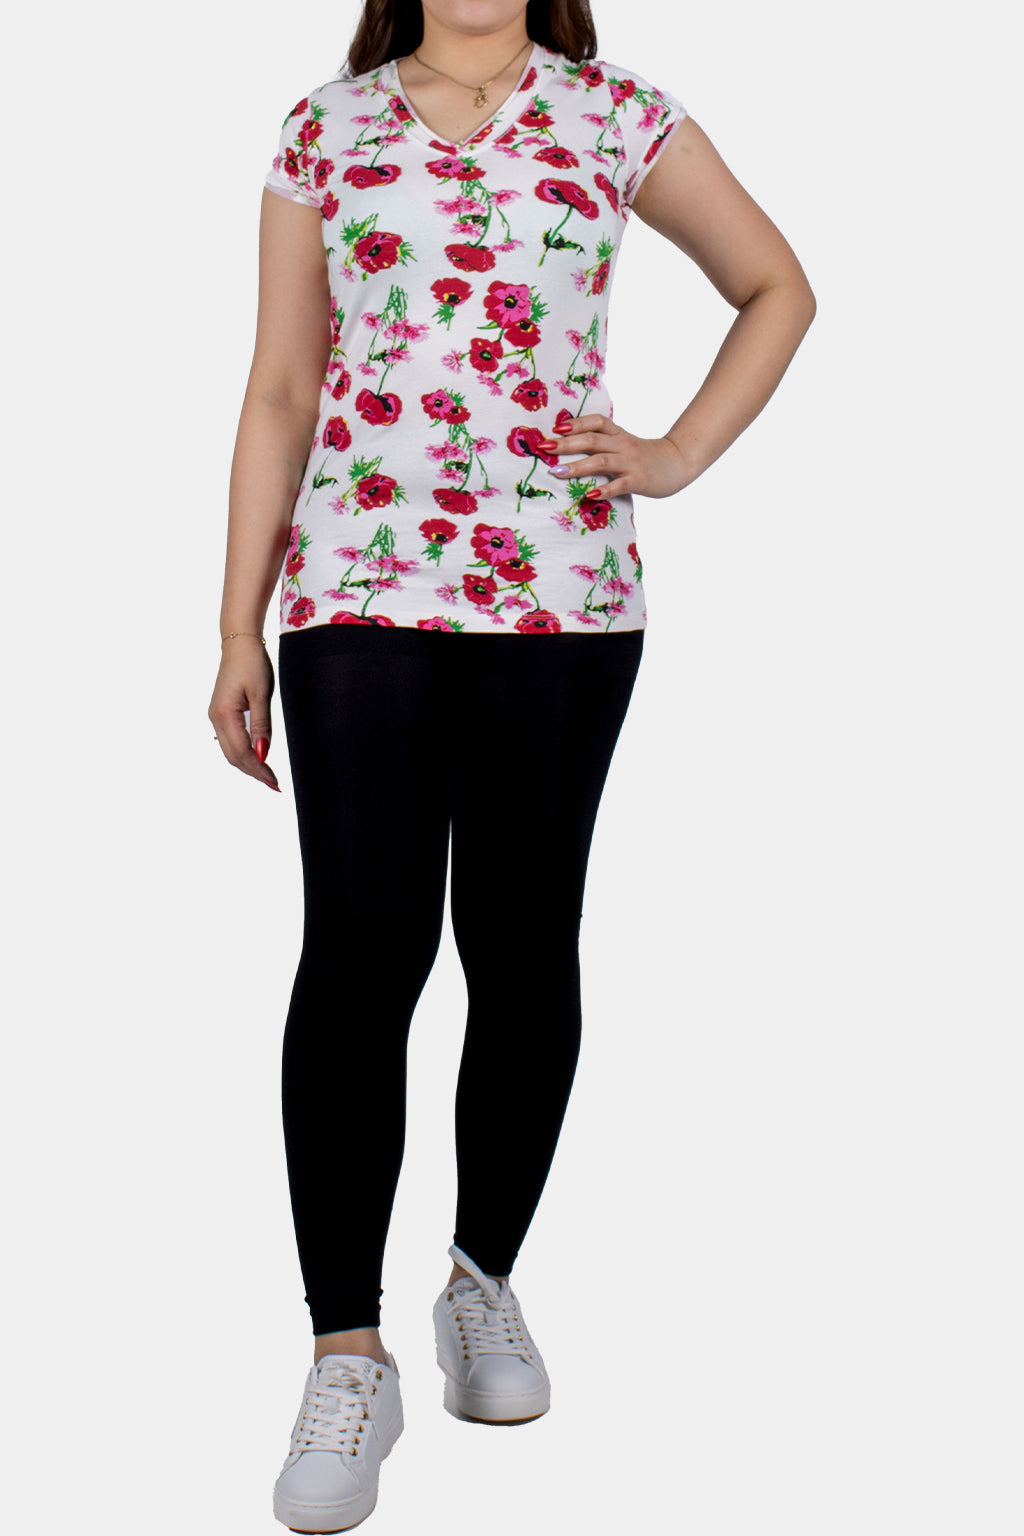 Bianco Nero - Women's V-neck Shirt Floral Pattern